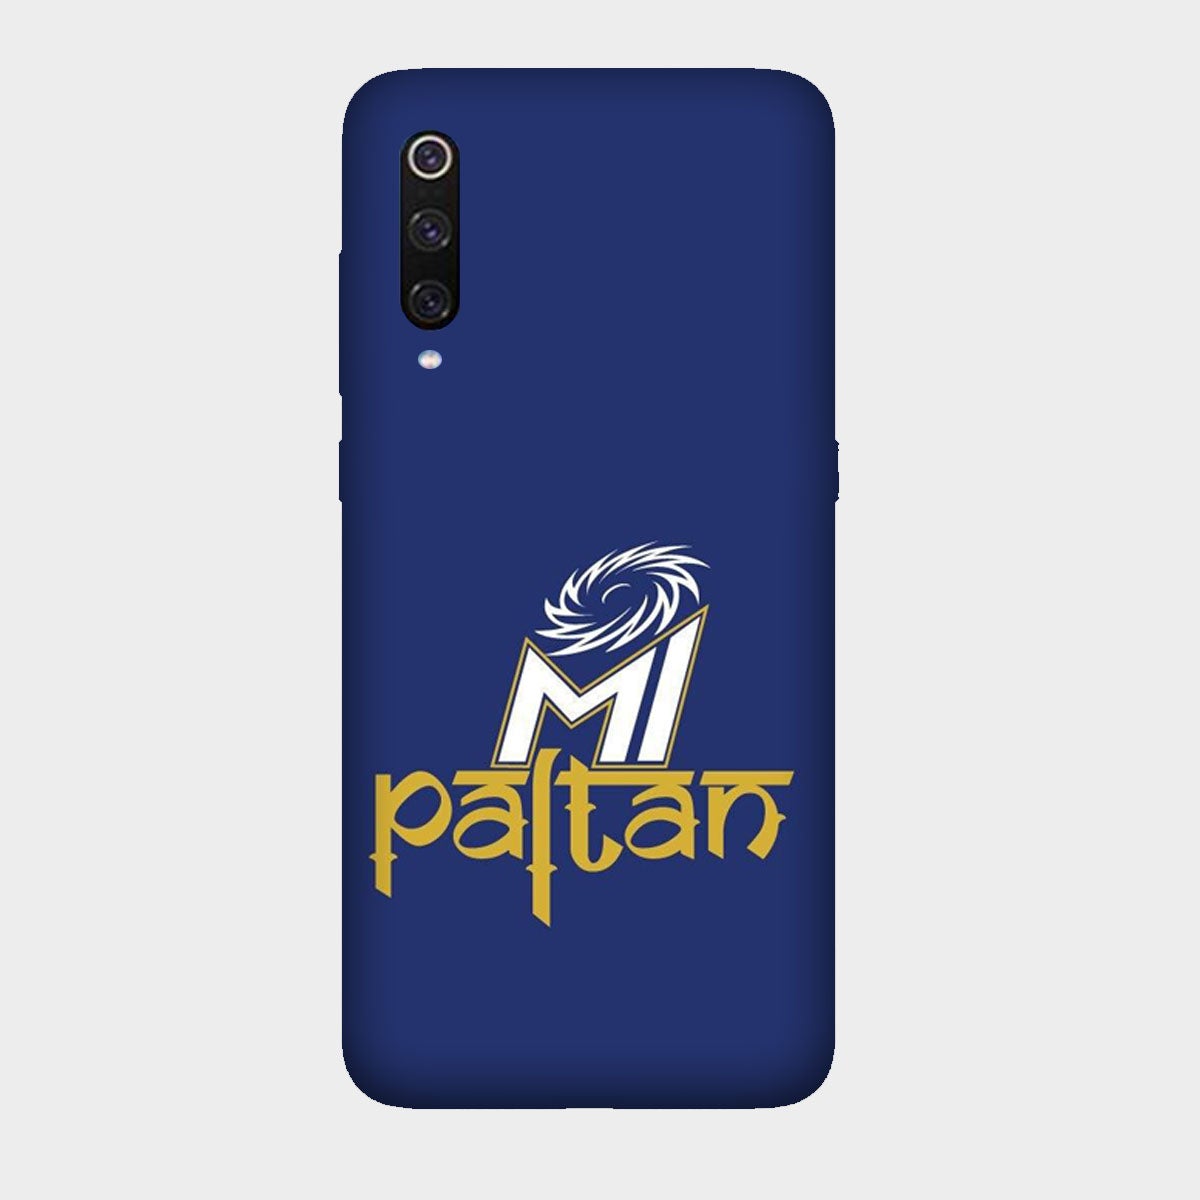 Mumbai Indians - MI Paltan - Mobile Phone Cover - Hard Case